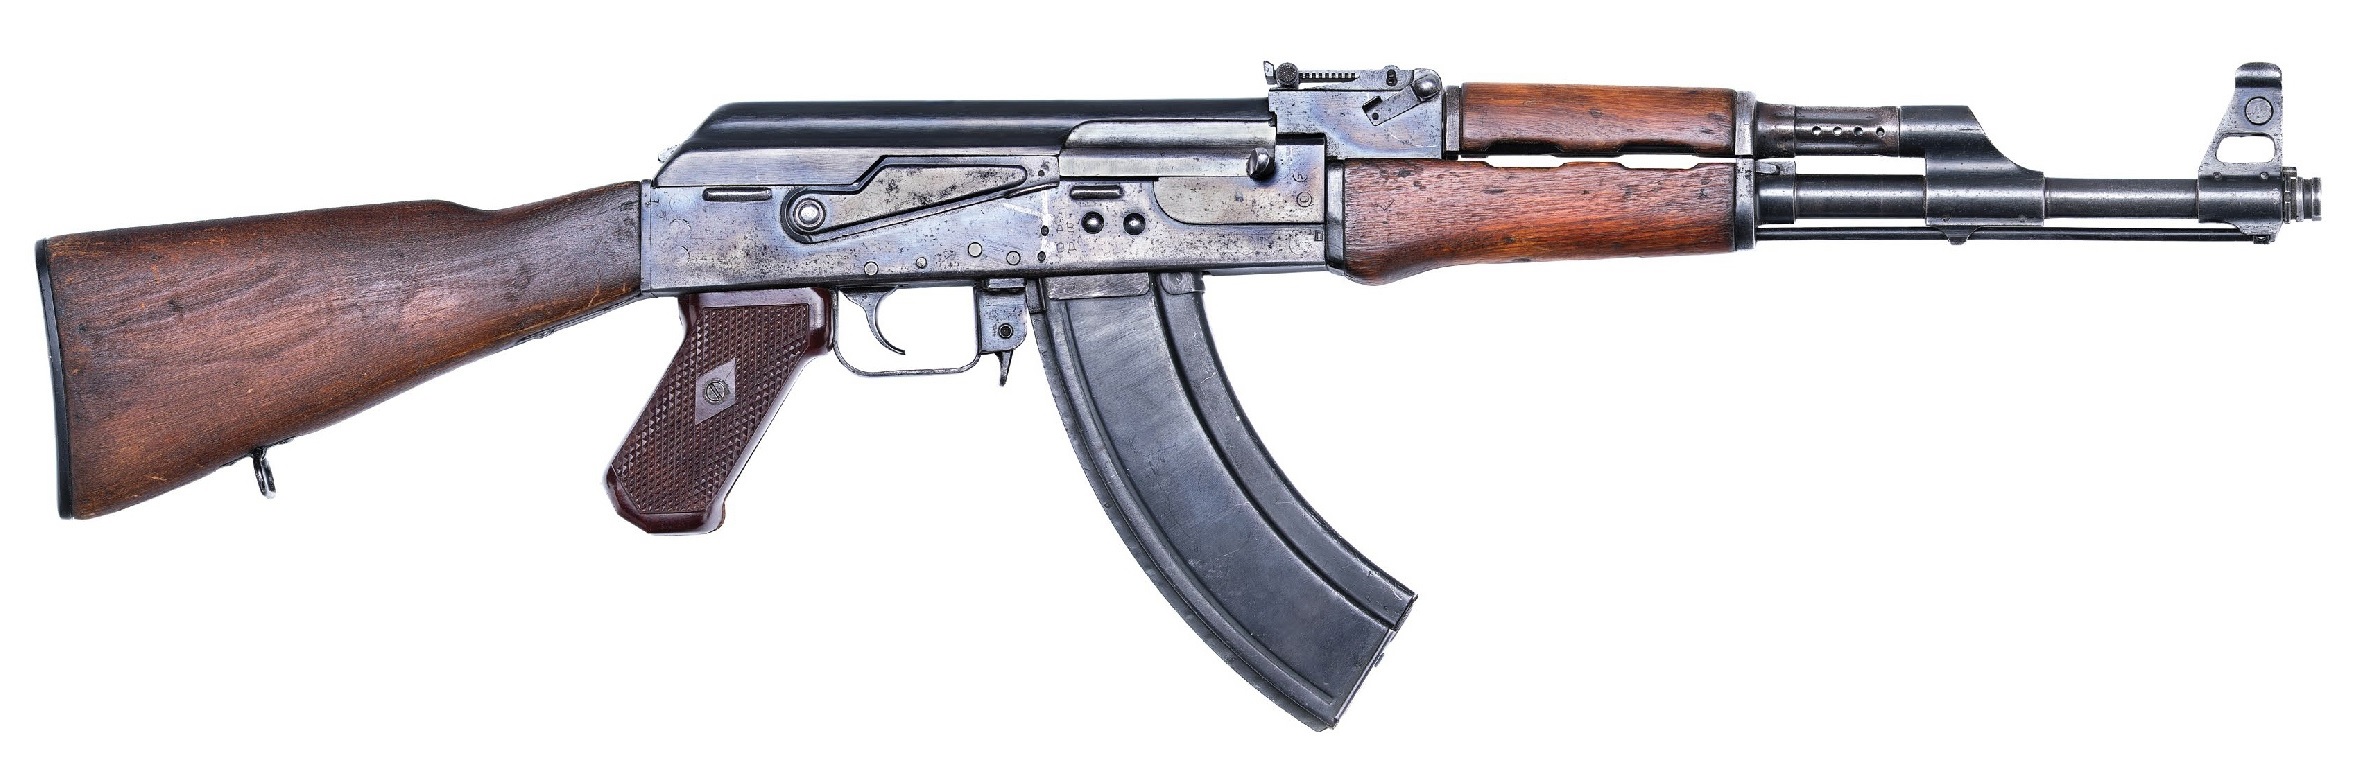 http://www.imfdb.org/images/a/a0/AK-47.jpg